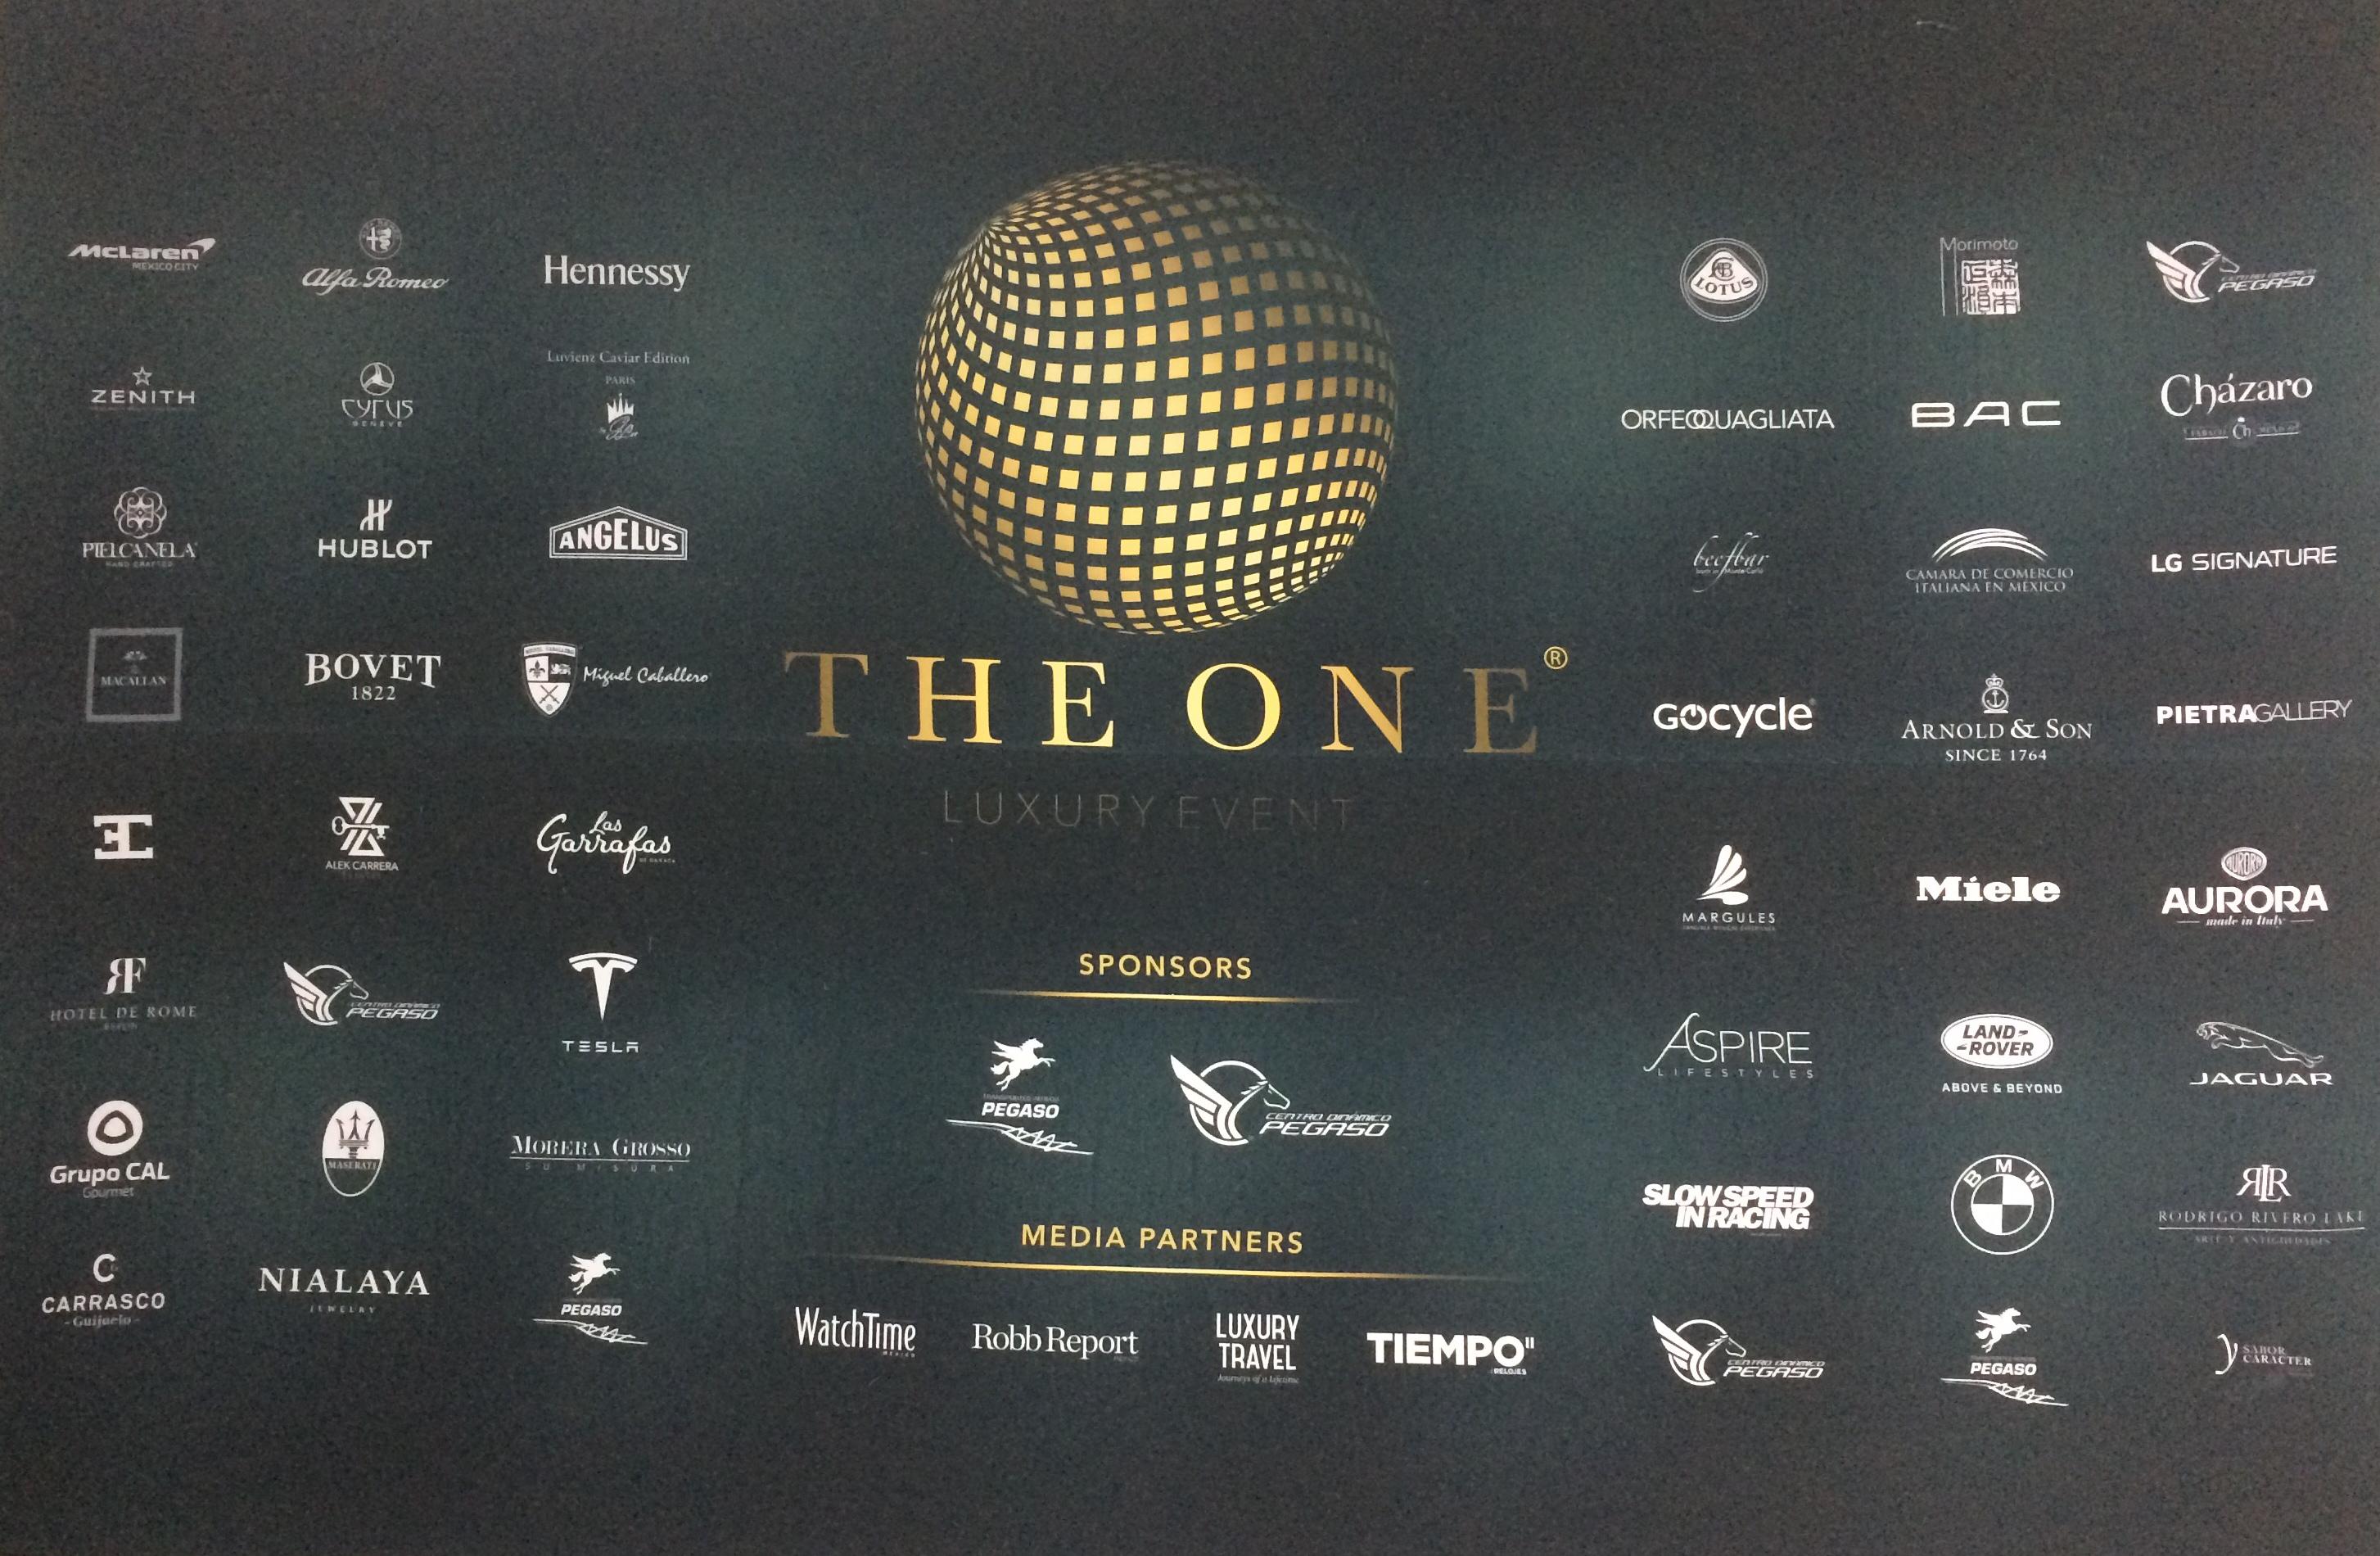 THE ONE – Luxury Event